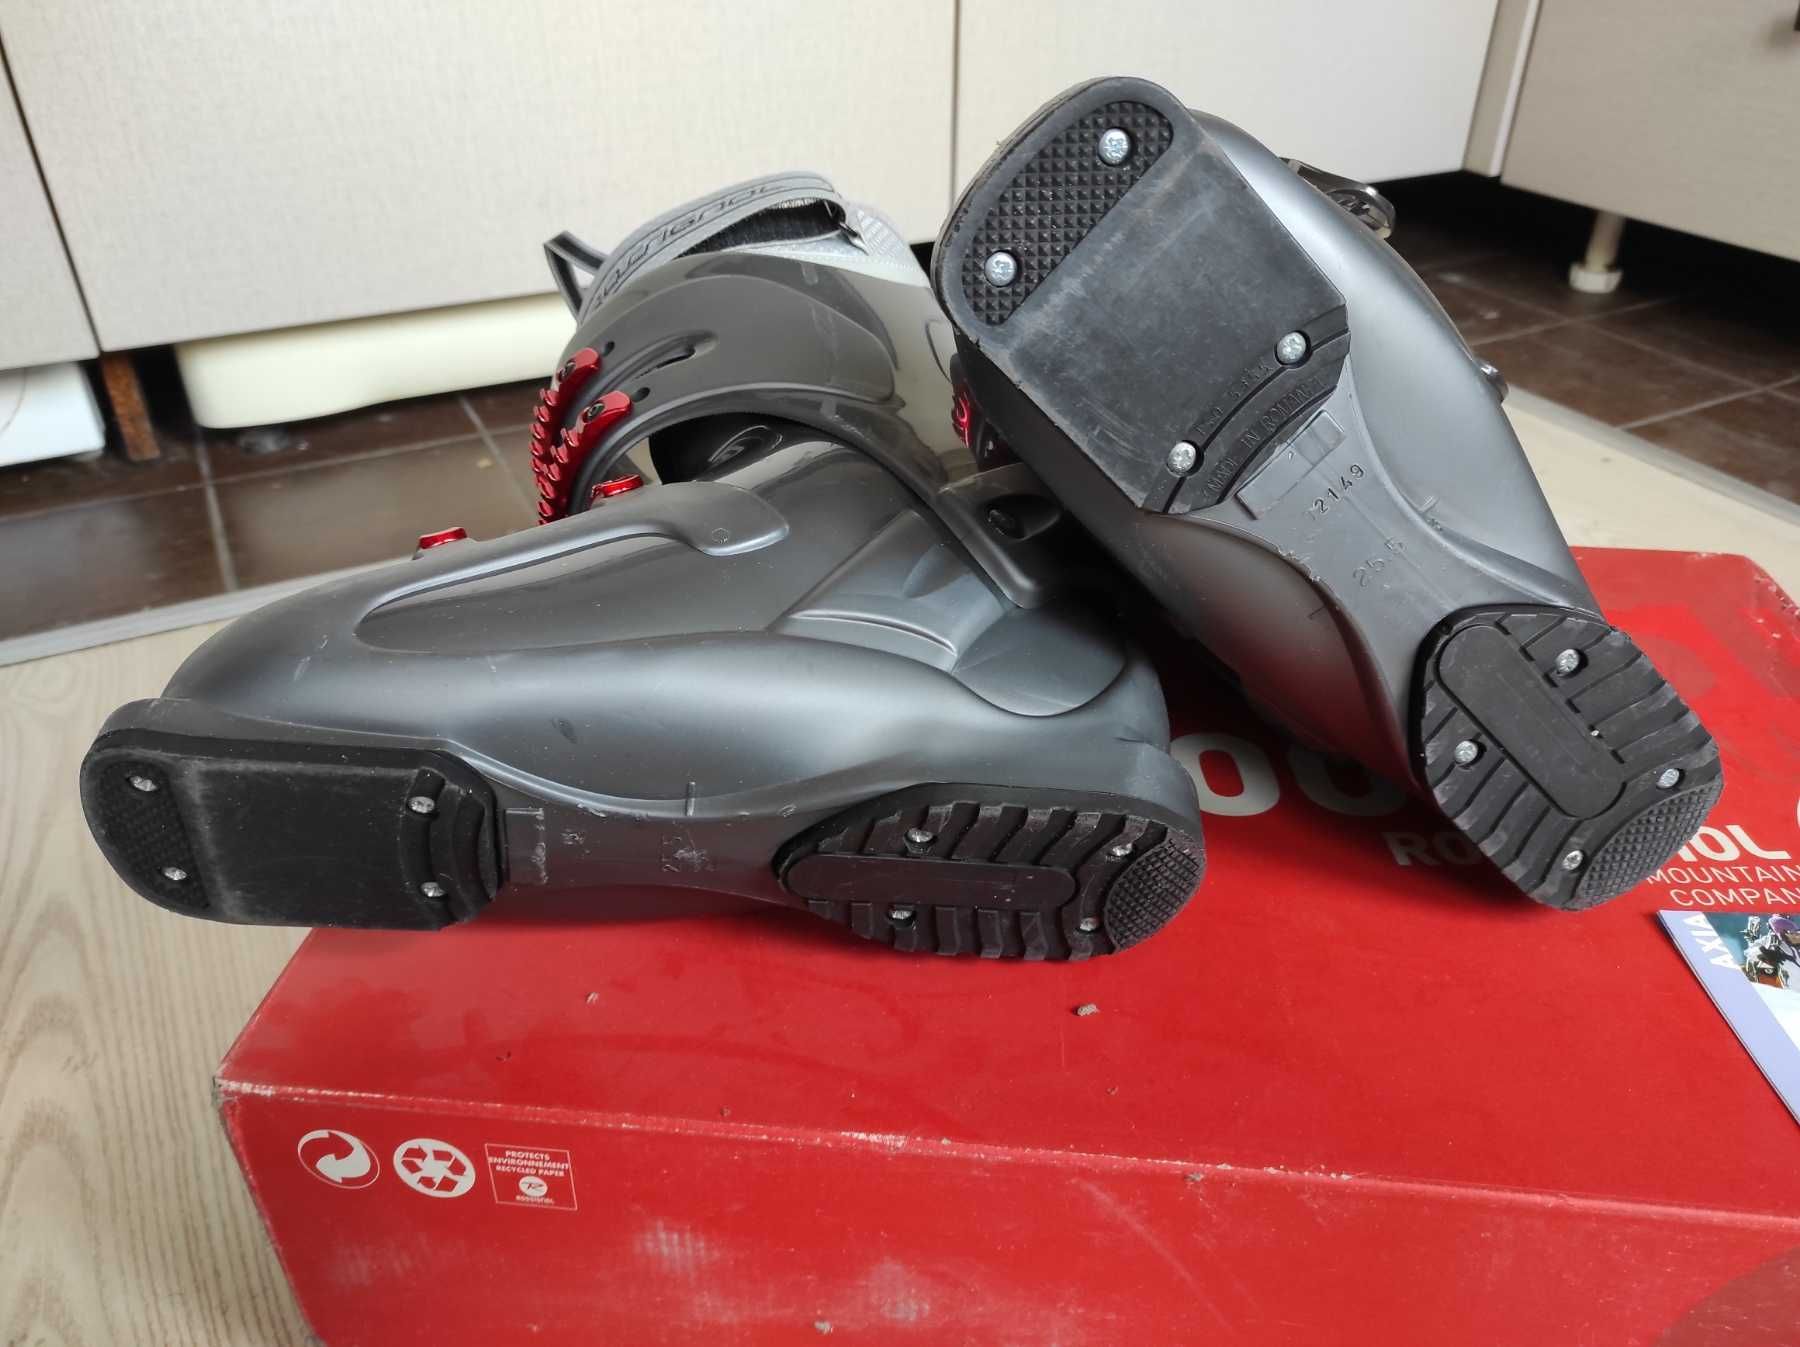 Ски обувки Rossignol Axia X - 25,5